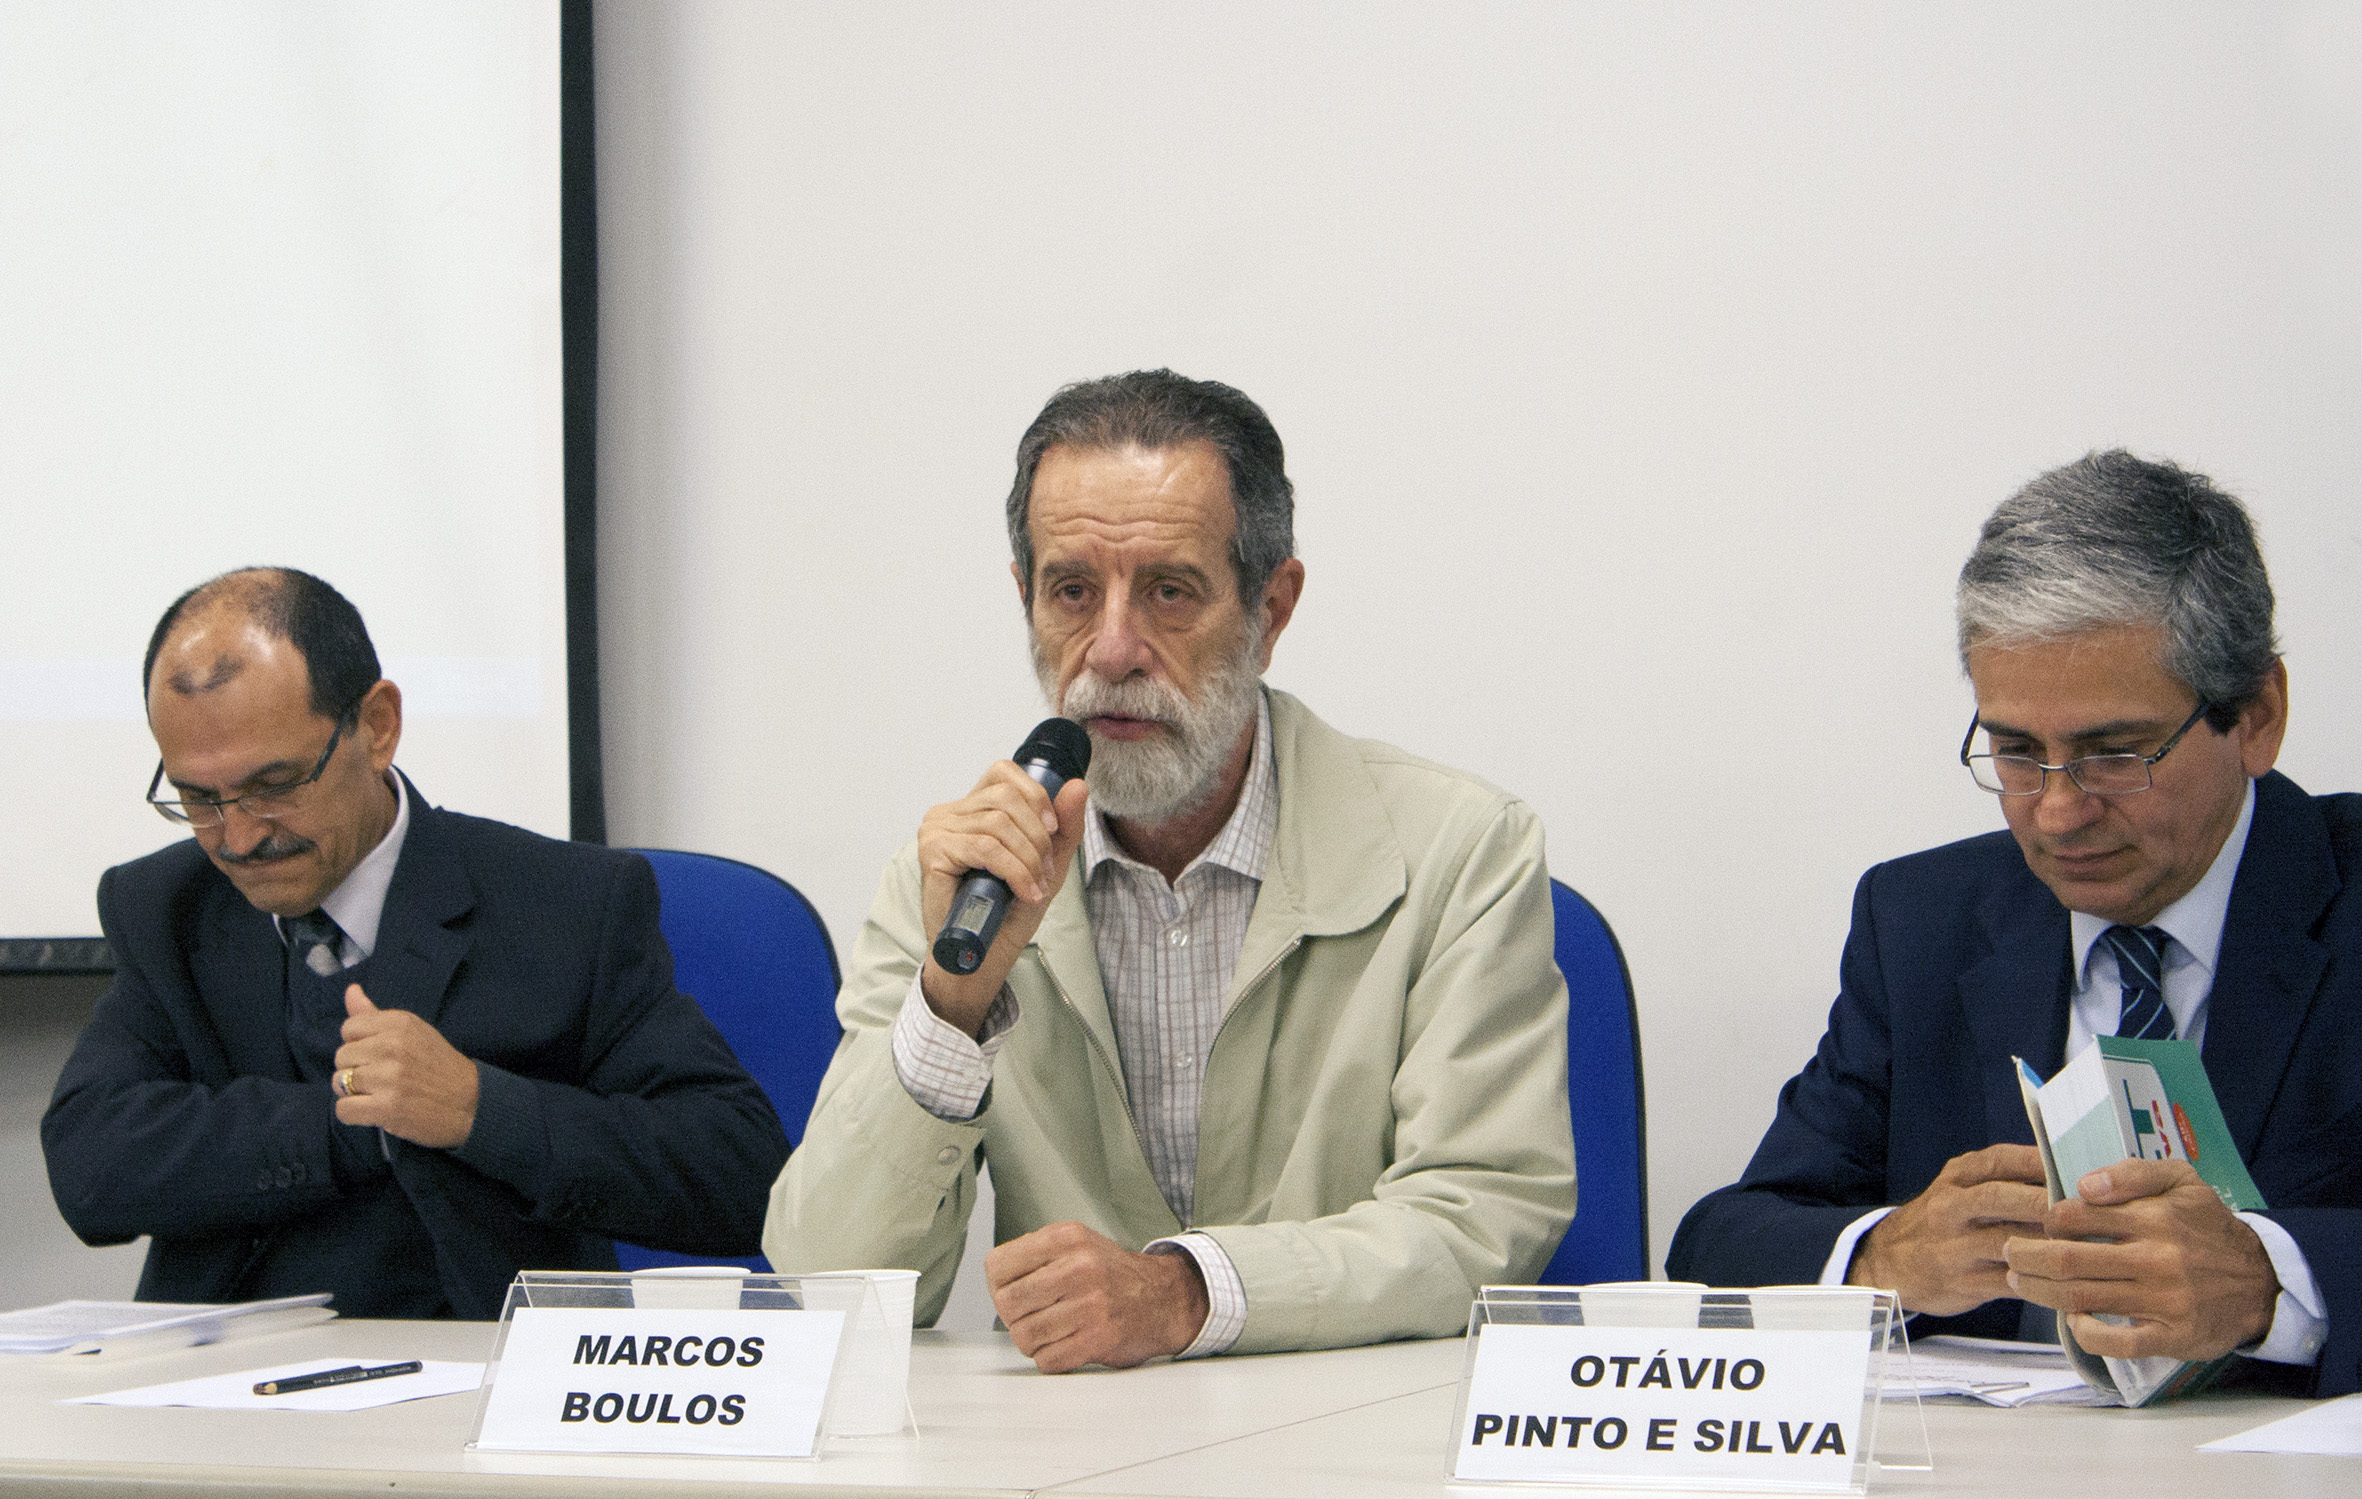 Salvador Ferreira da Silva, Marcos Boulos e Otávio Pinto e Silva